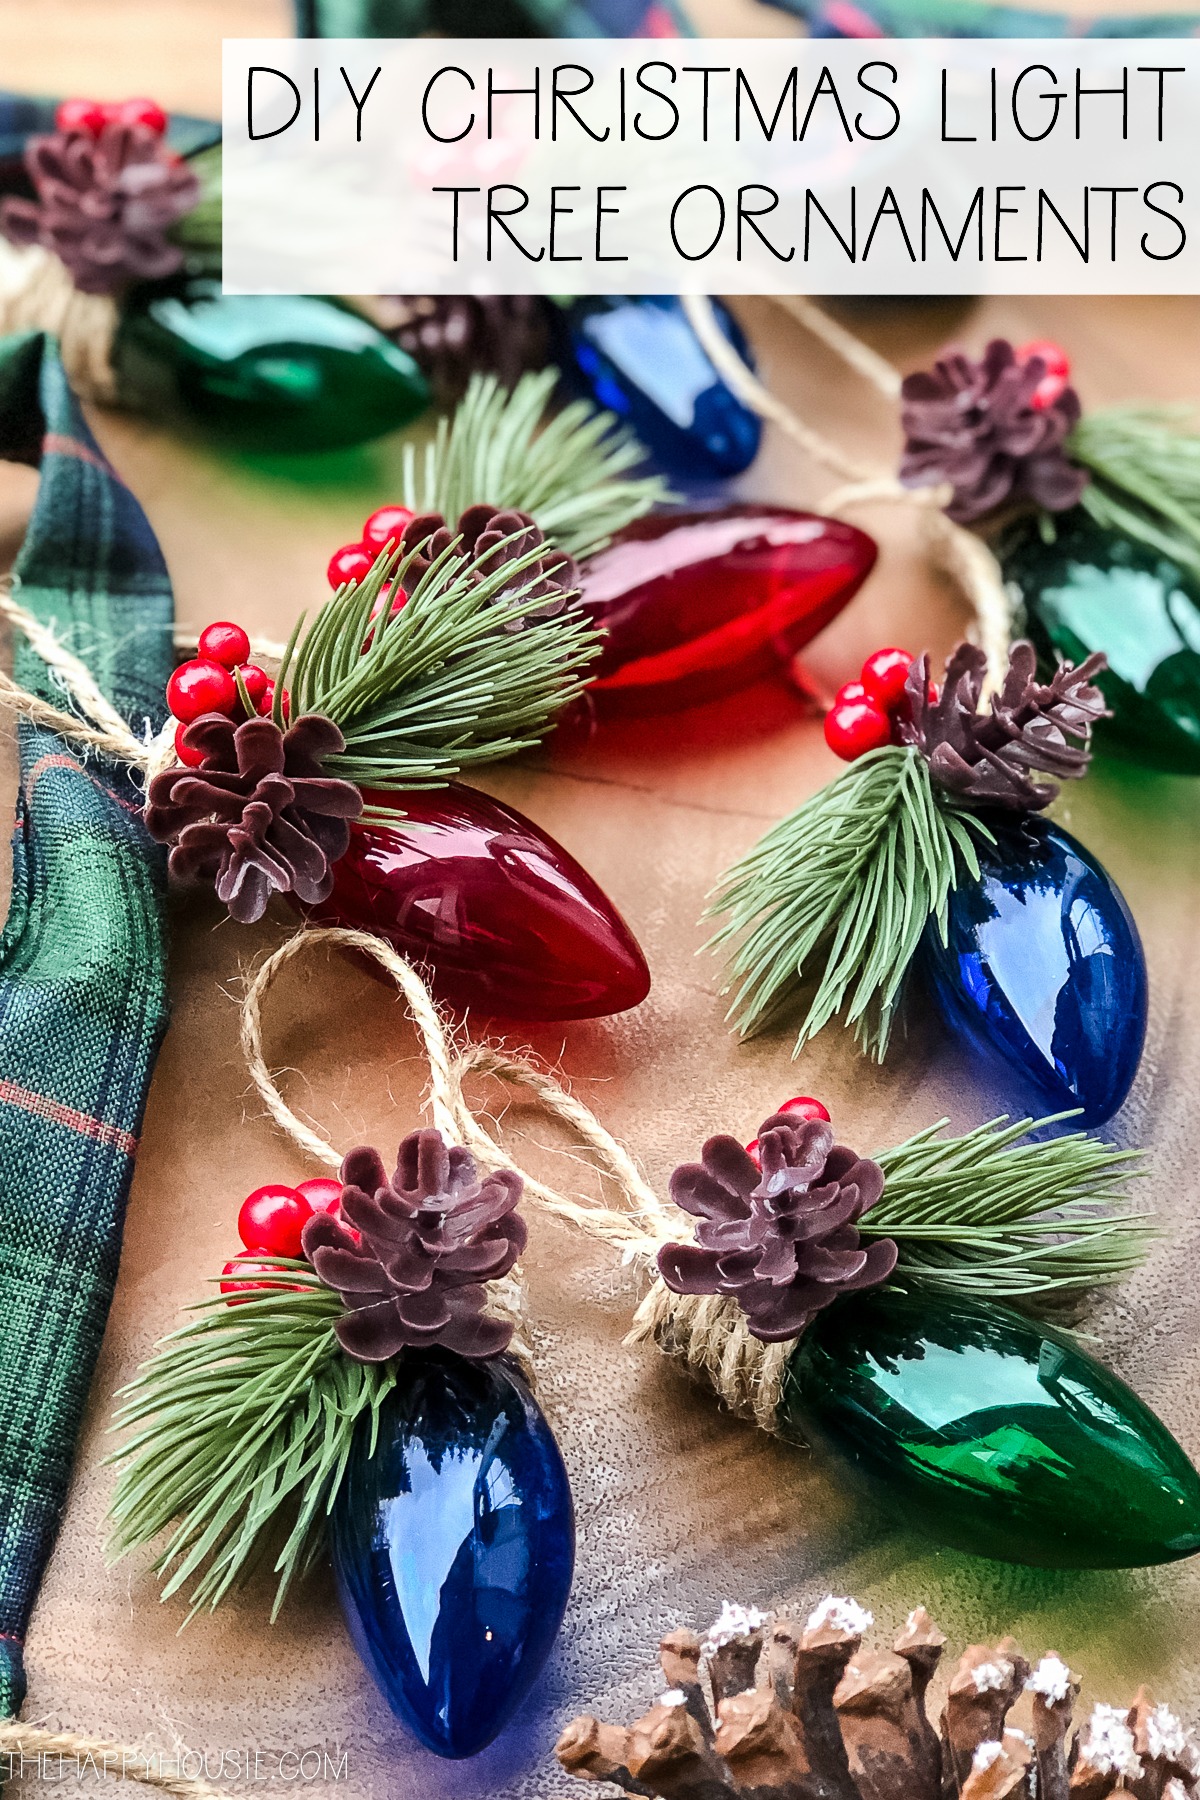 DIY Christmas Light Tree Ornaments graphic.